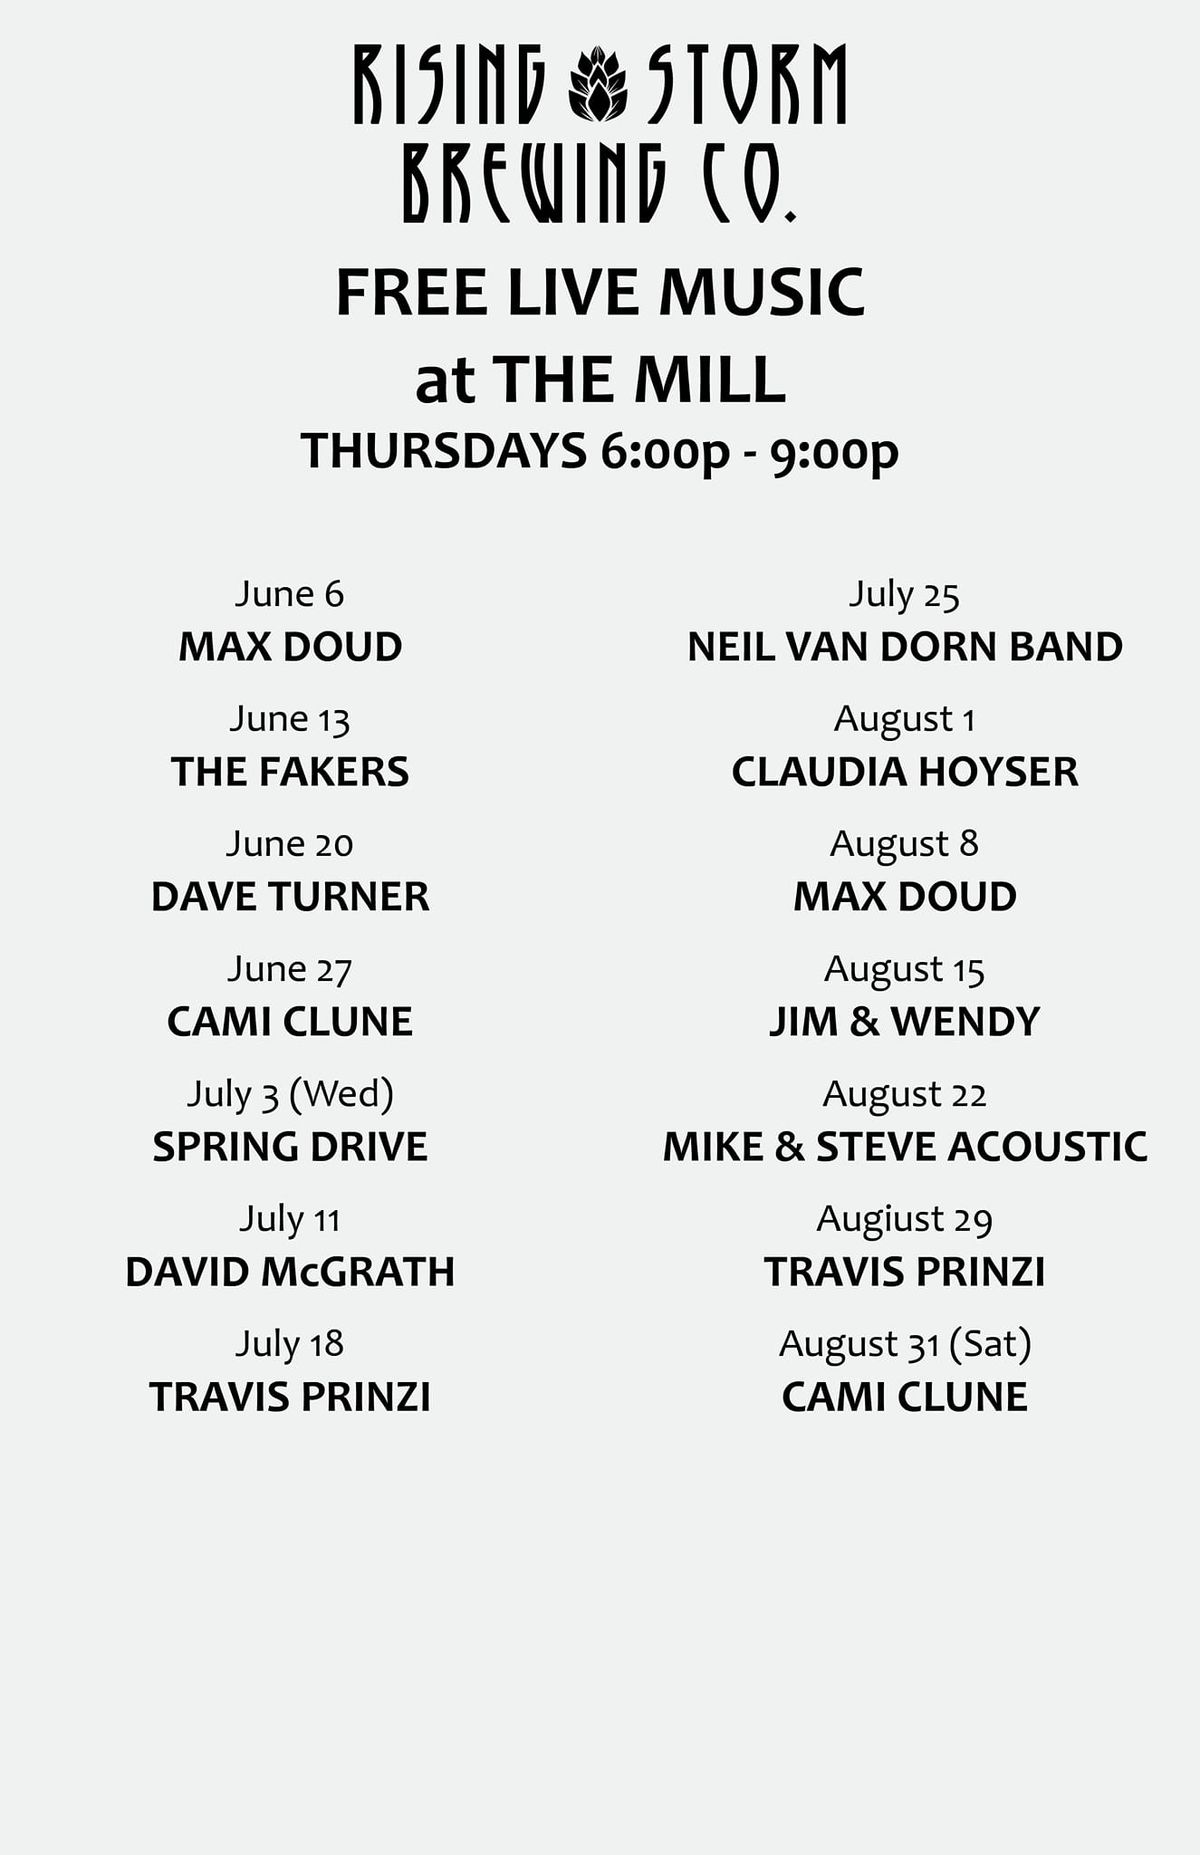 Thursday Night Music @ The Mill!